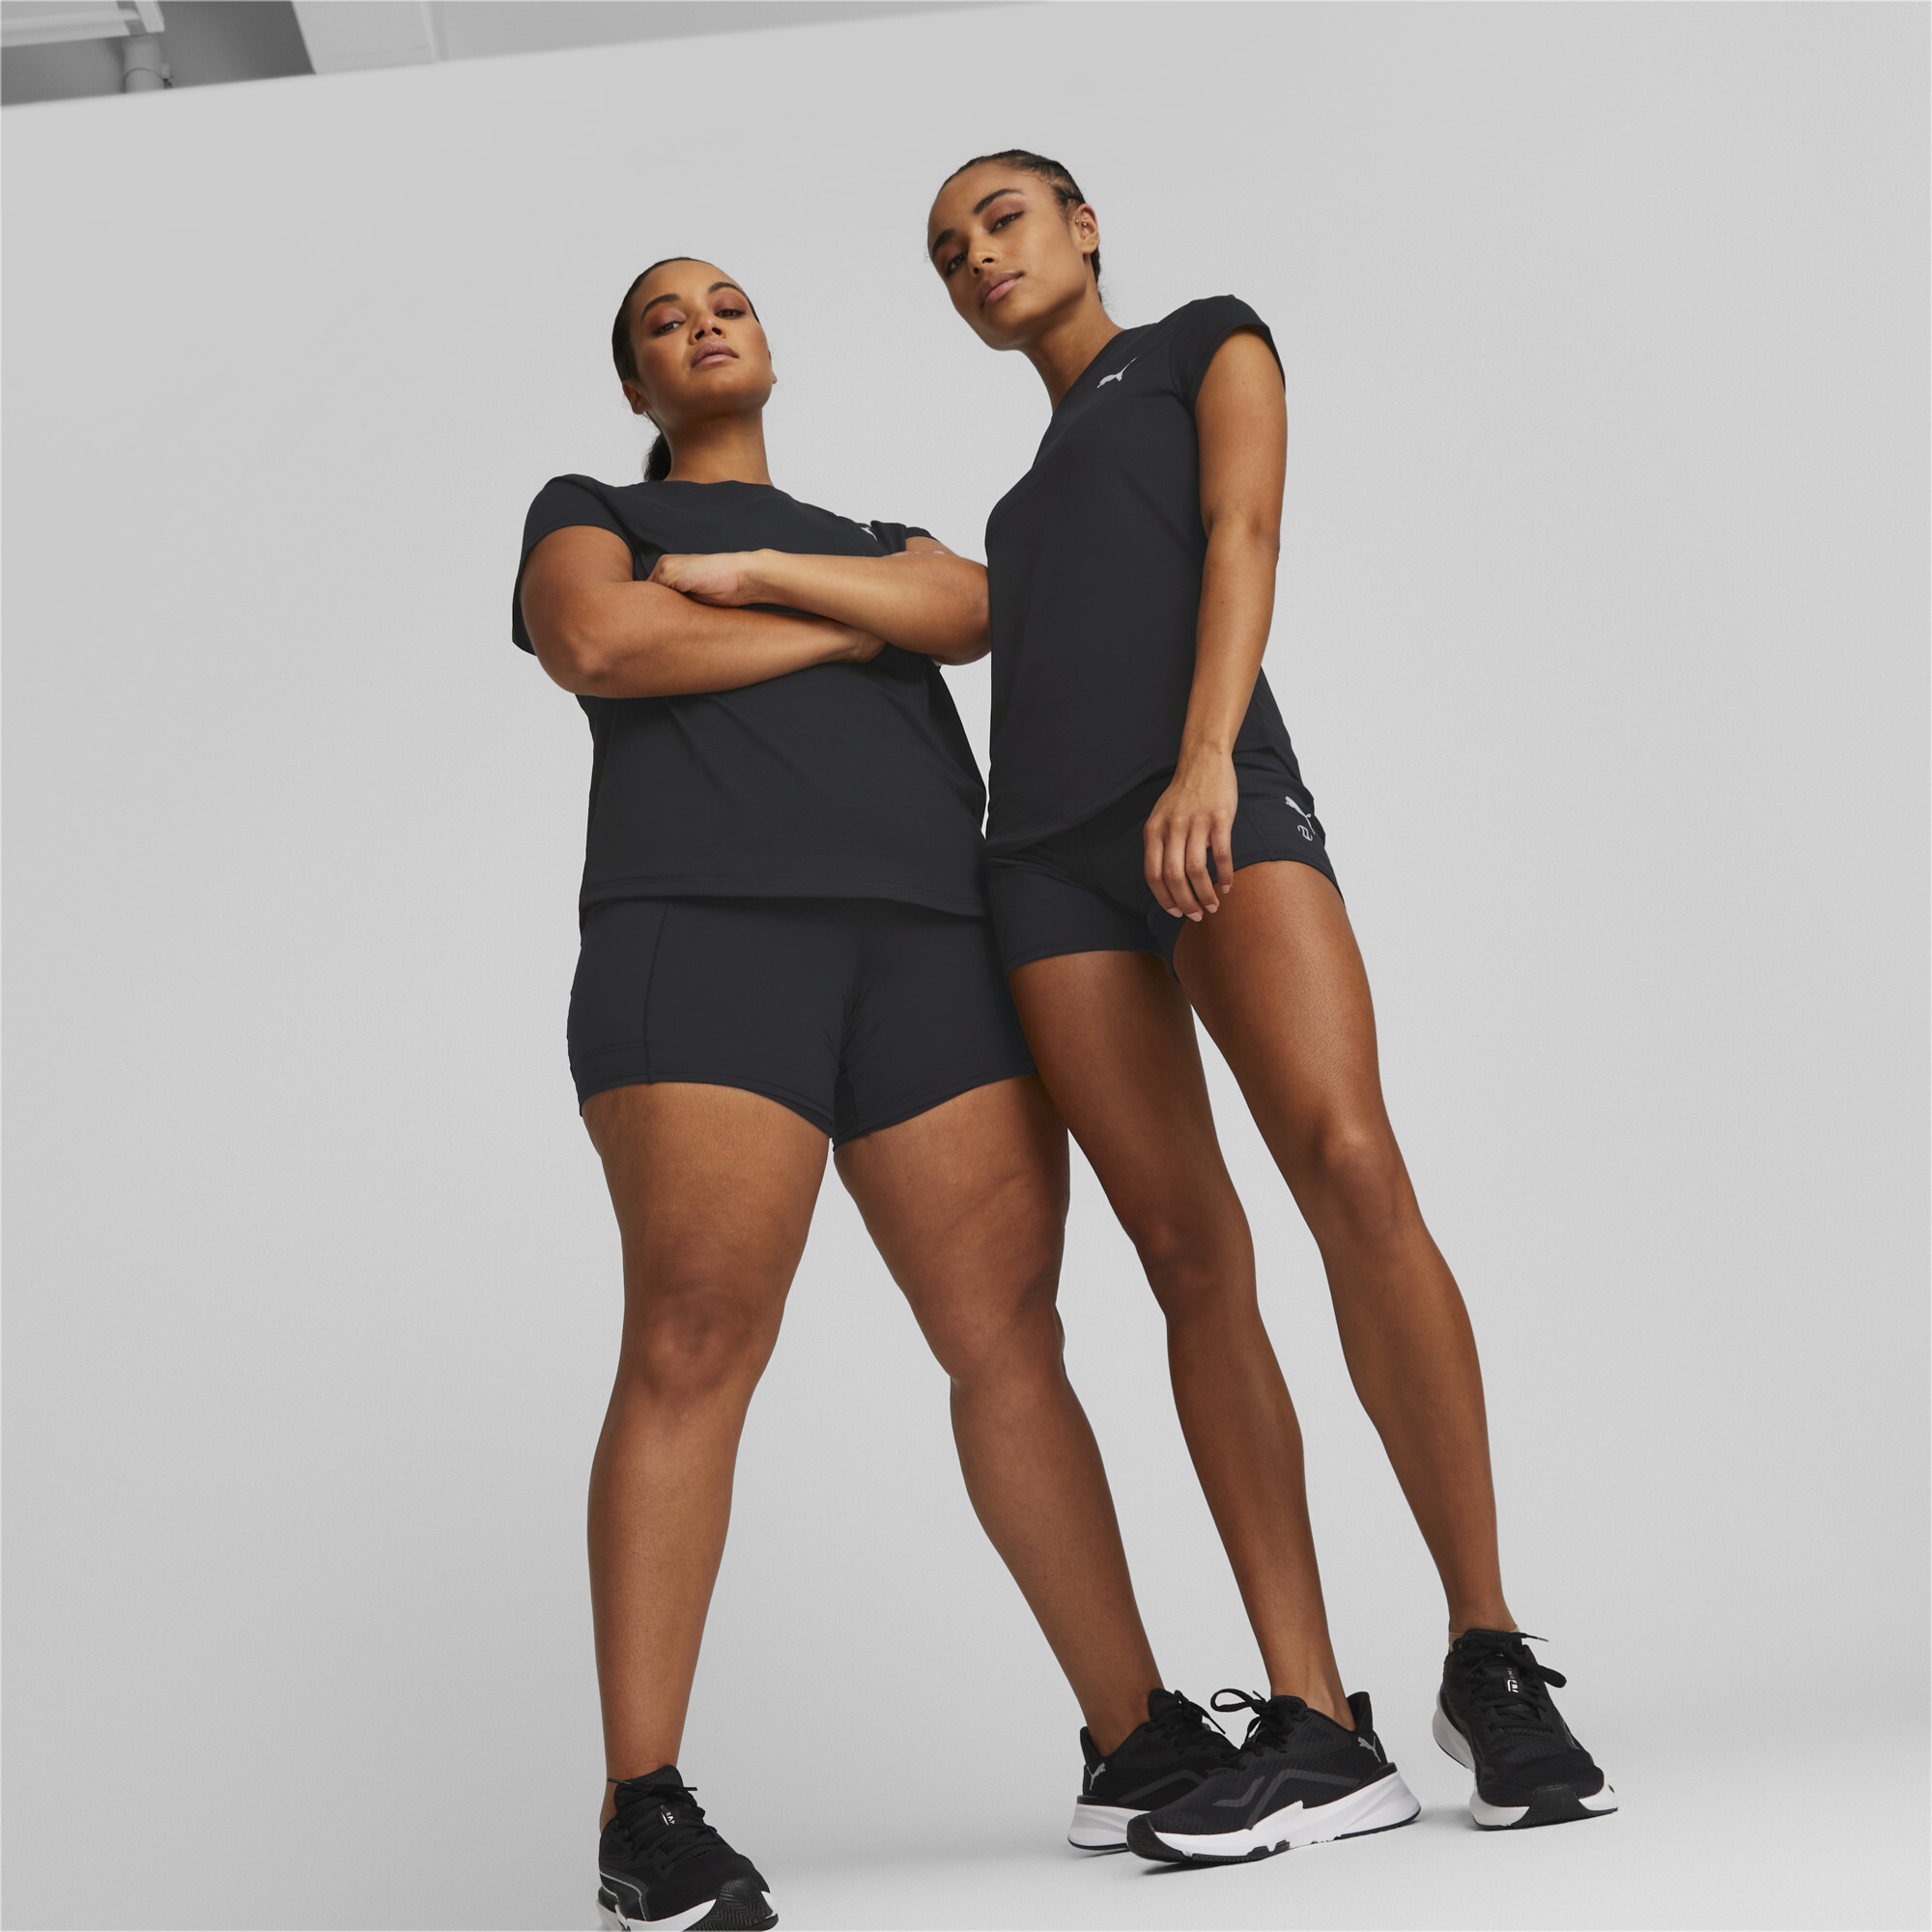 Women's PUMA X Modibodi Active Biker Shorts Women In Black, Size Large